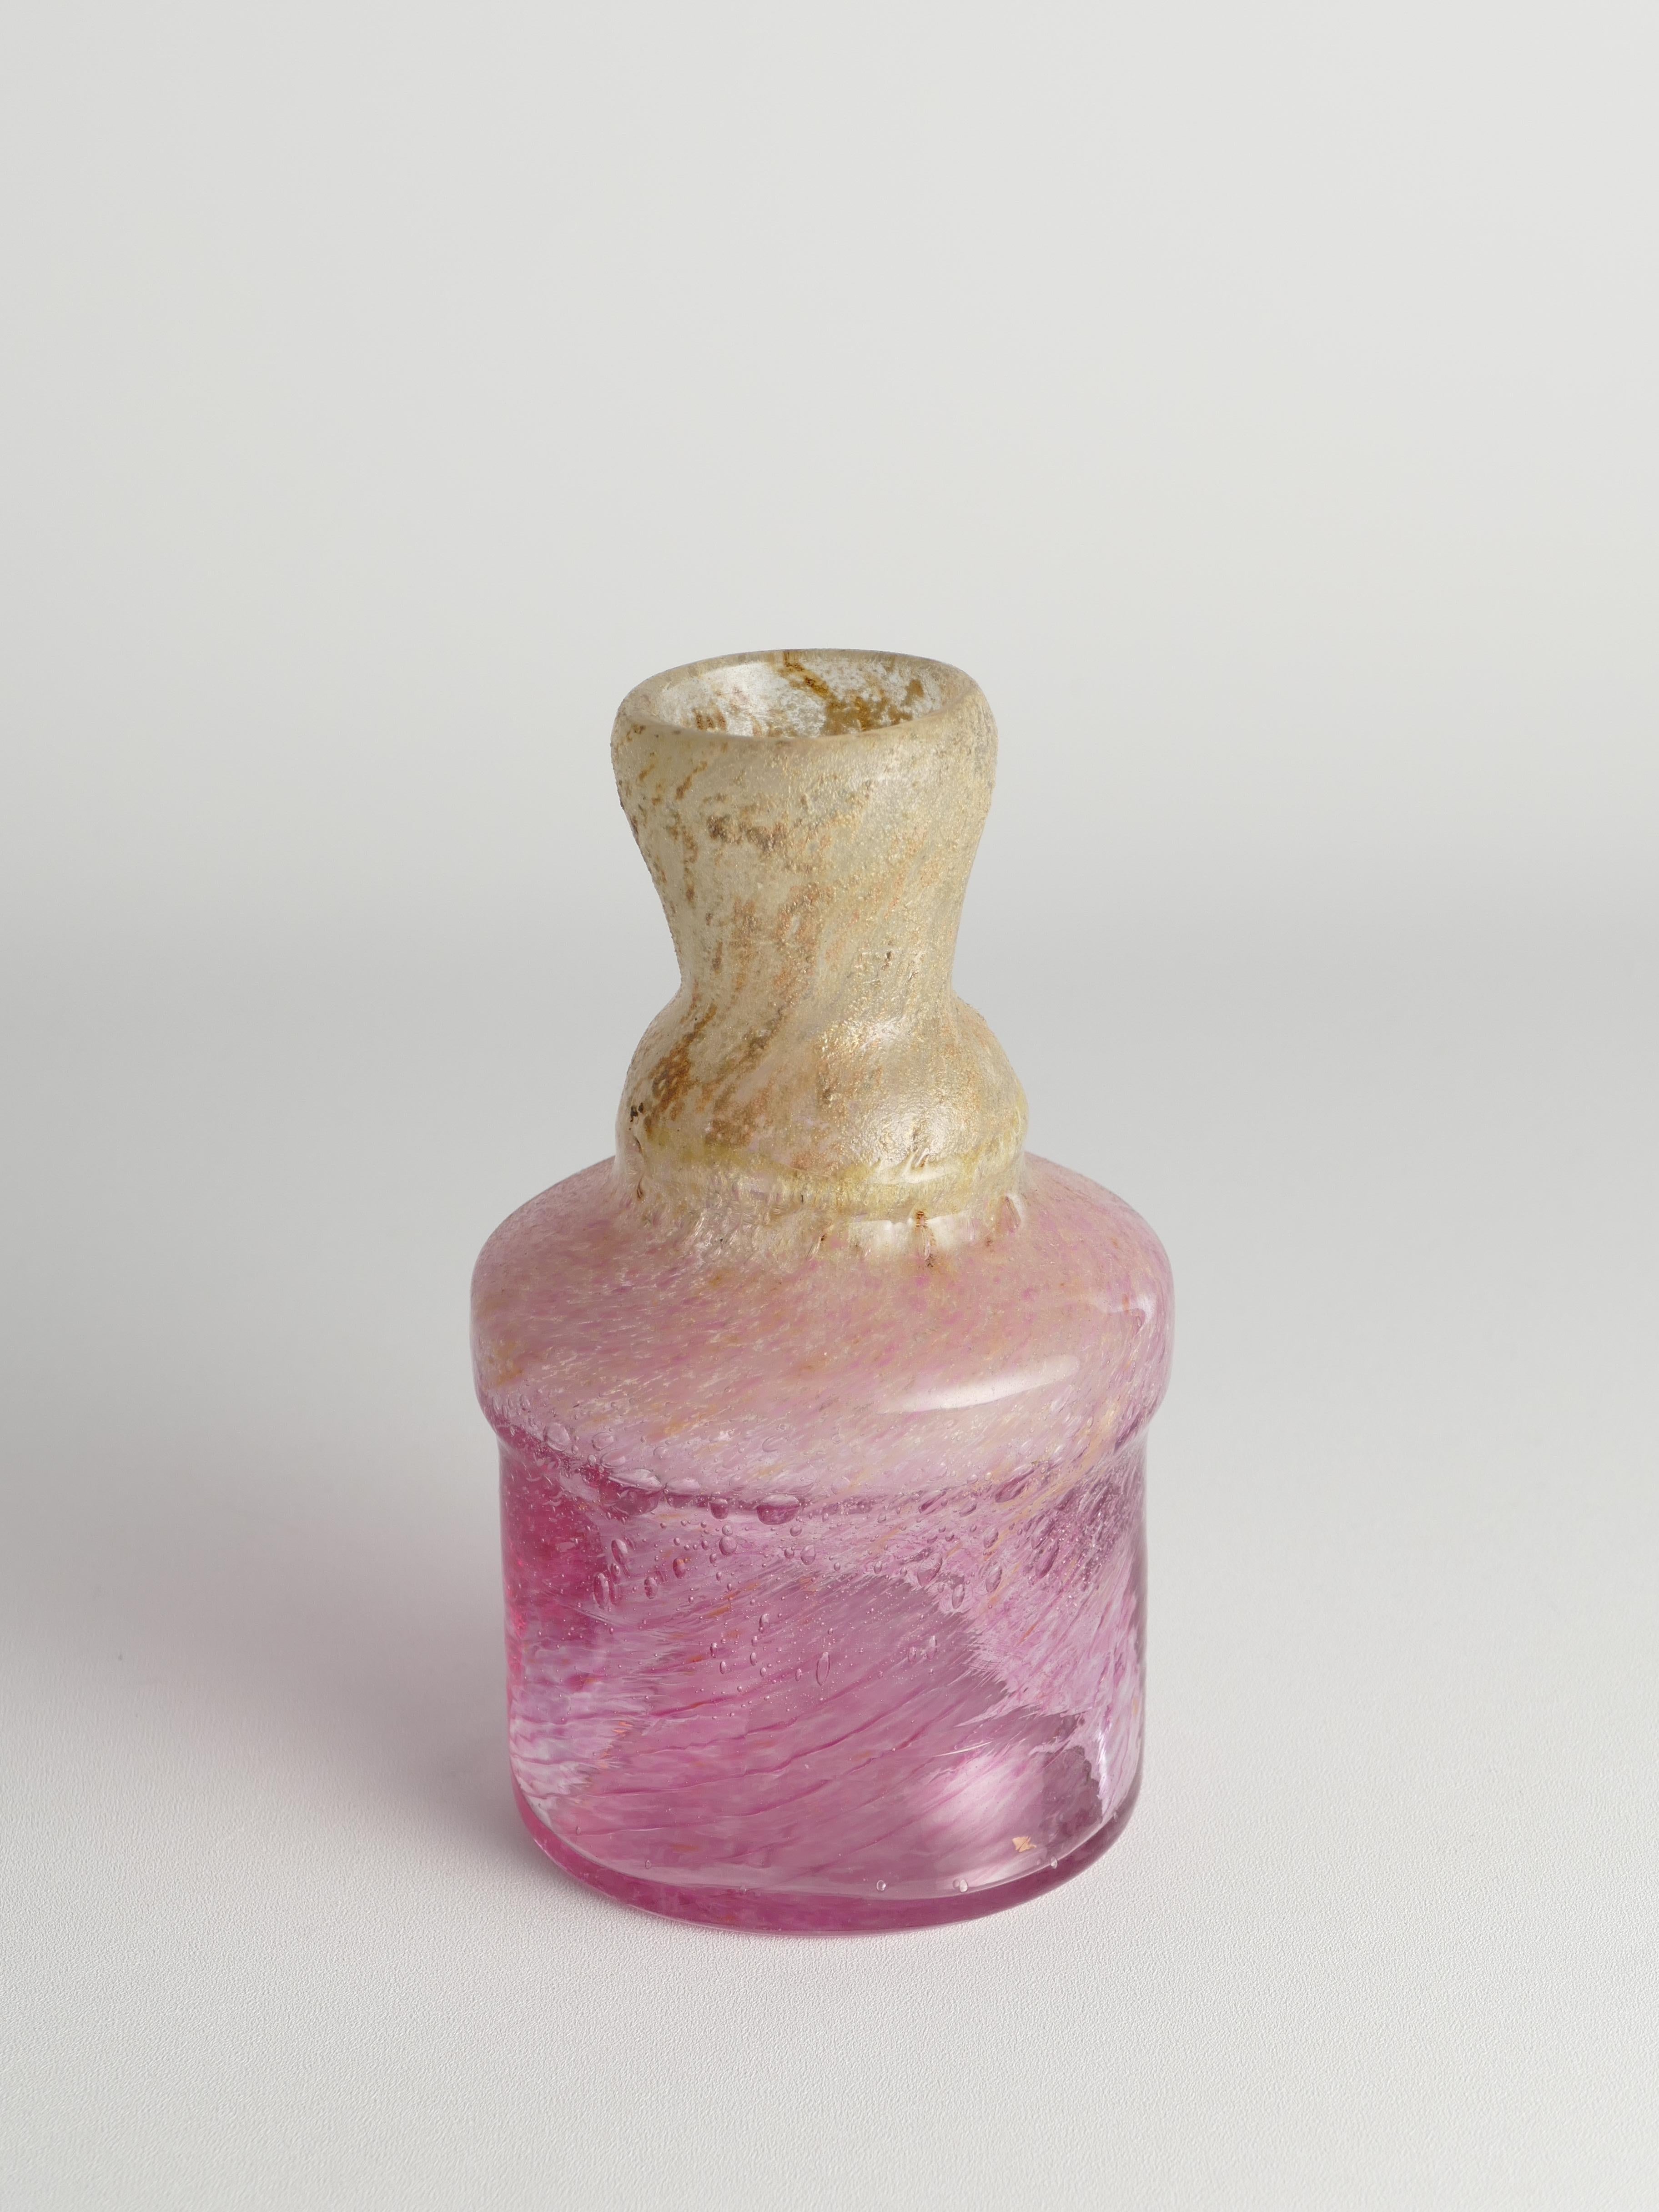 Unique Bubblegum Pink and Yellow Art Glass Vase by Milan Vobruba, Sweden 1980s For Sale 2